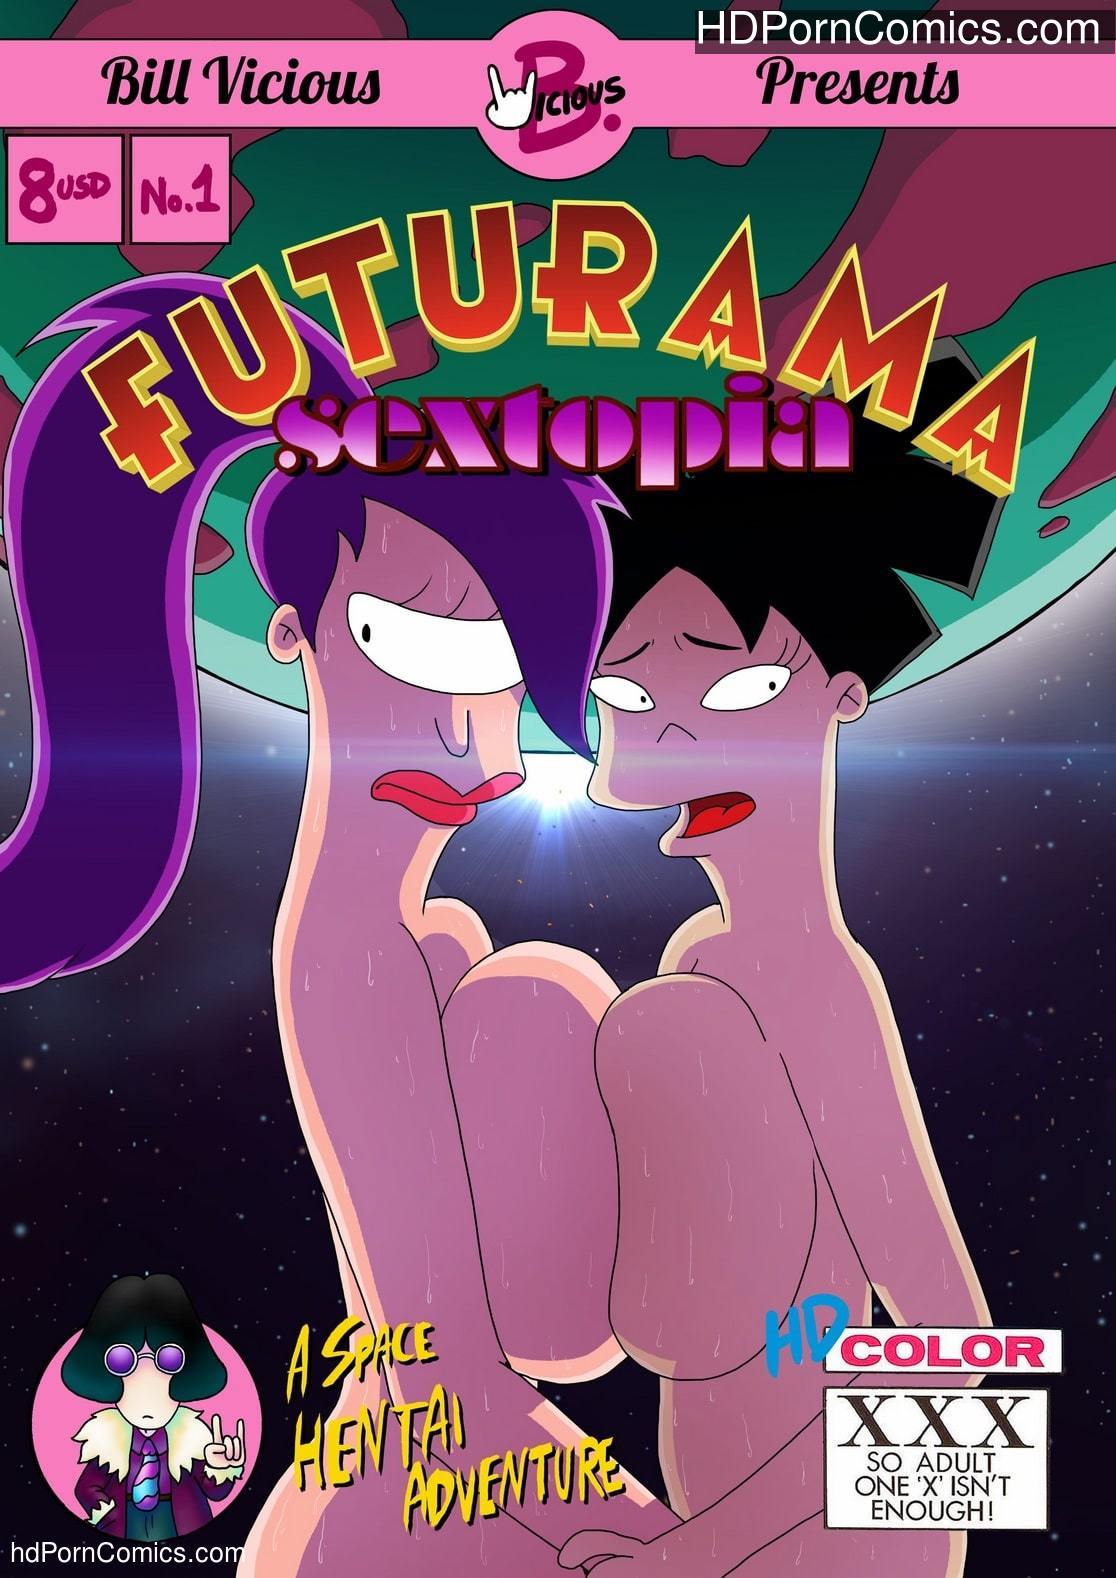 Hardcore Cartoon Porn Futurama - Futurama Sextopia free Porn Comic - HD Porn Comics